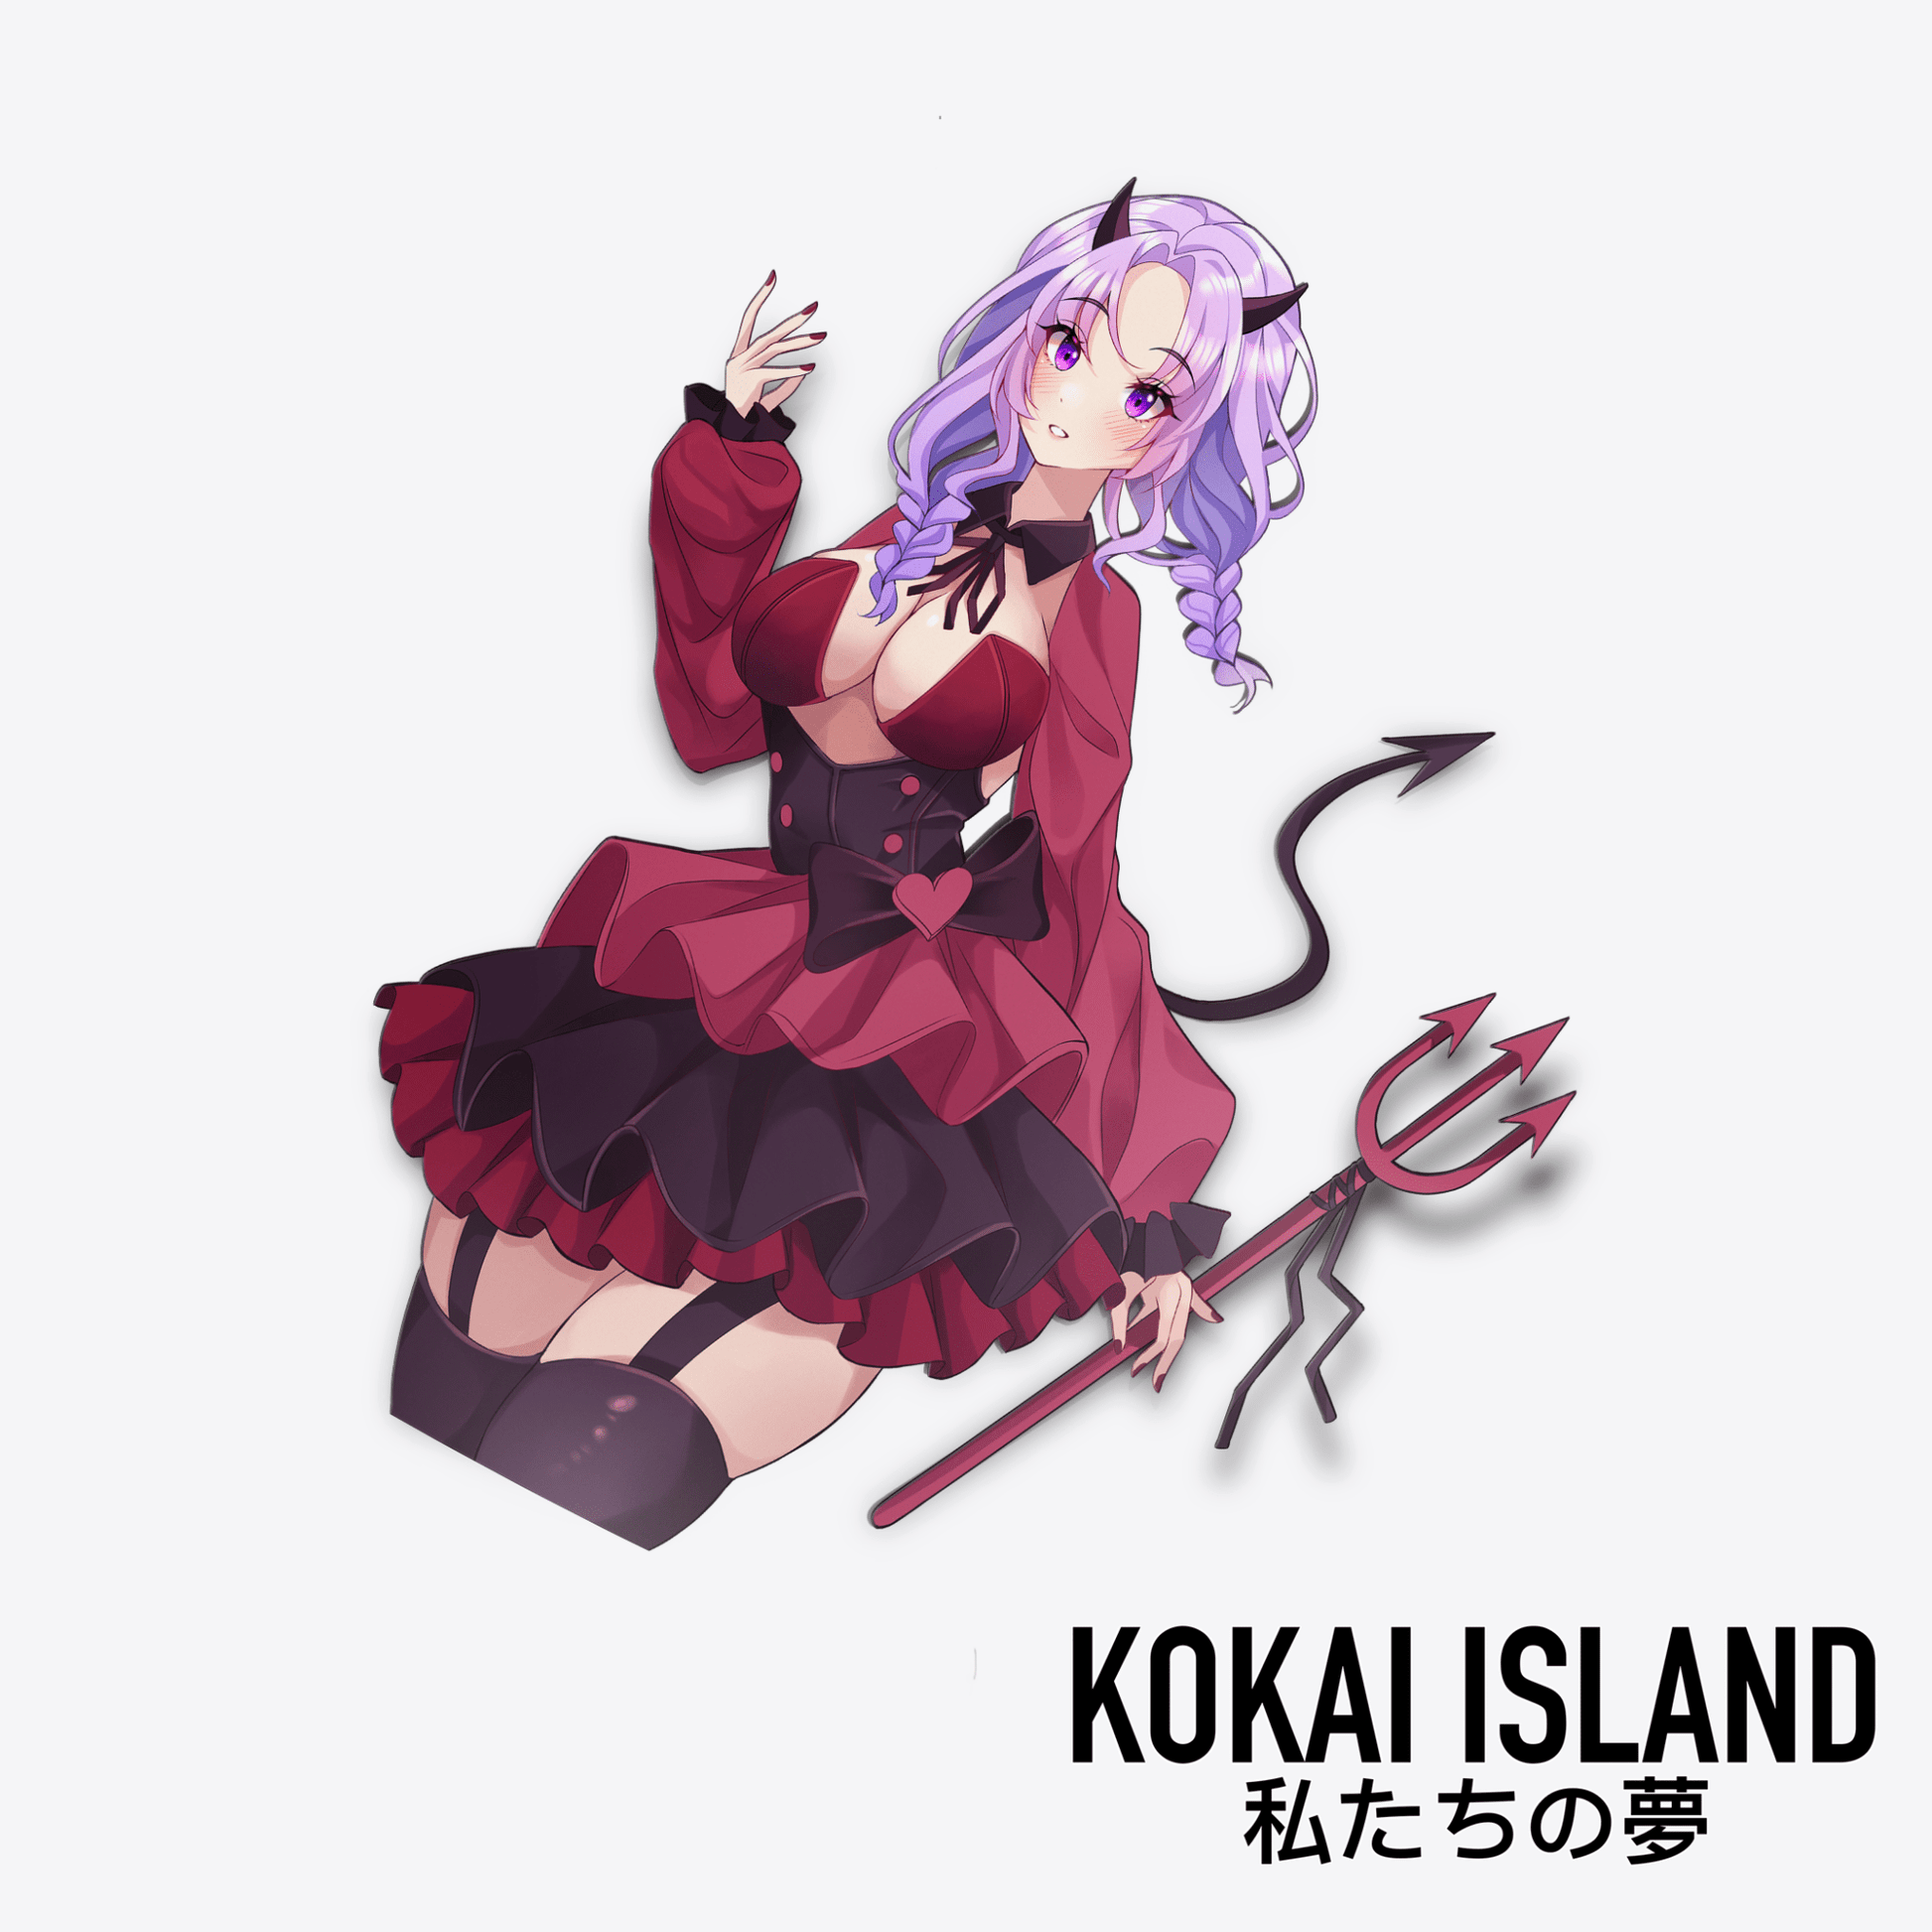 Devil Koko DecalDecalKokai Island